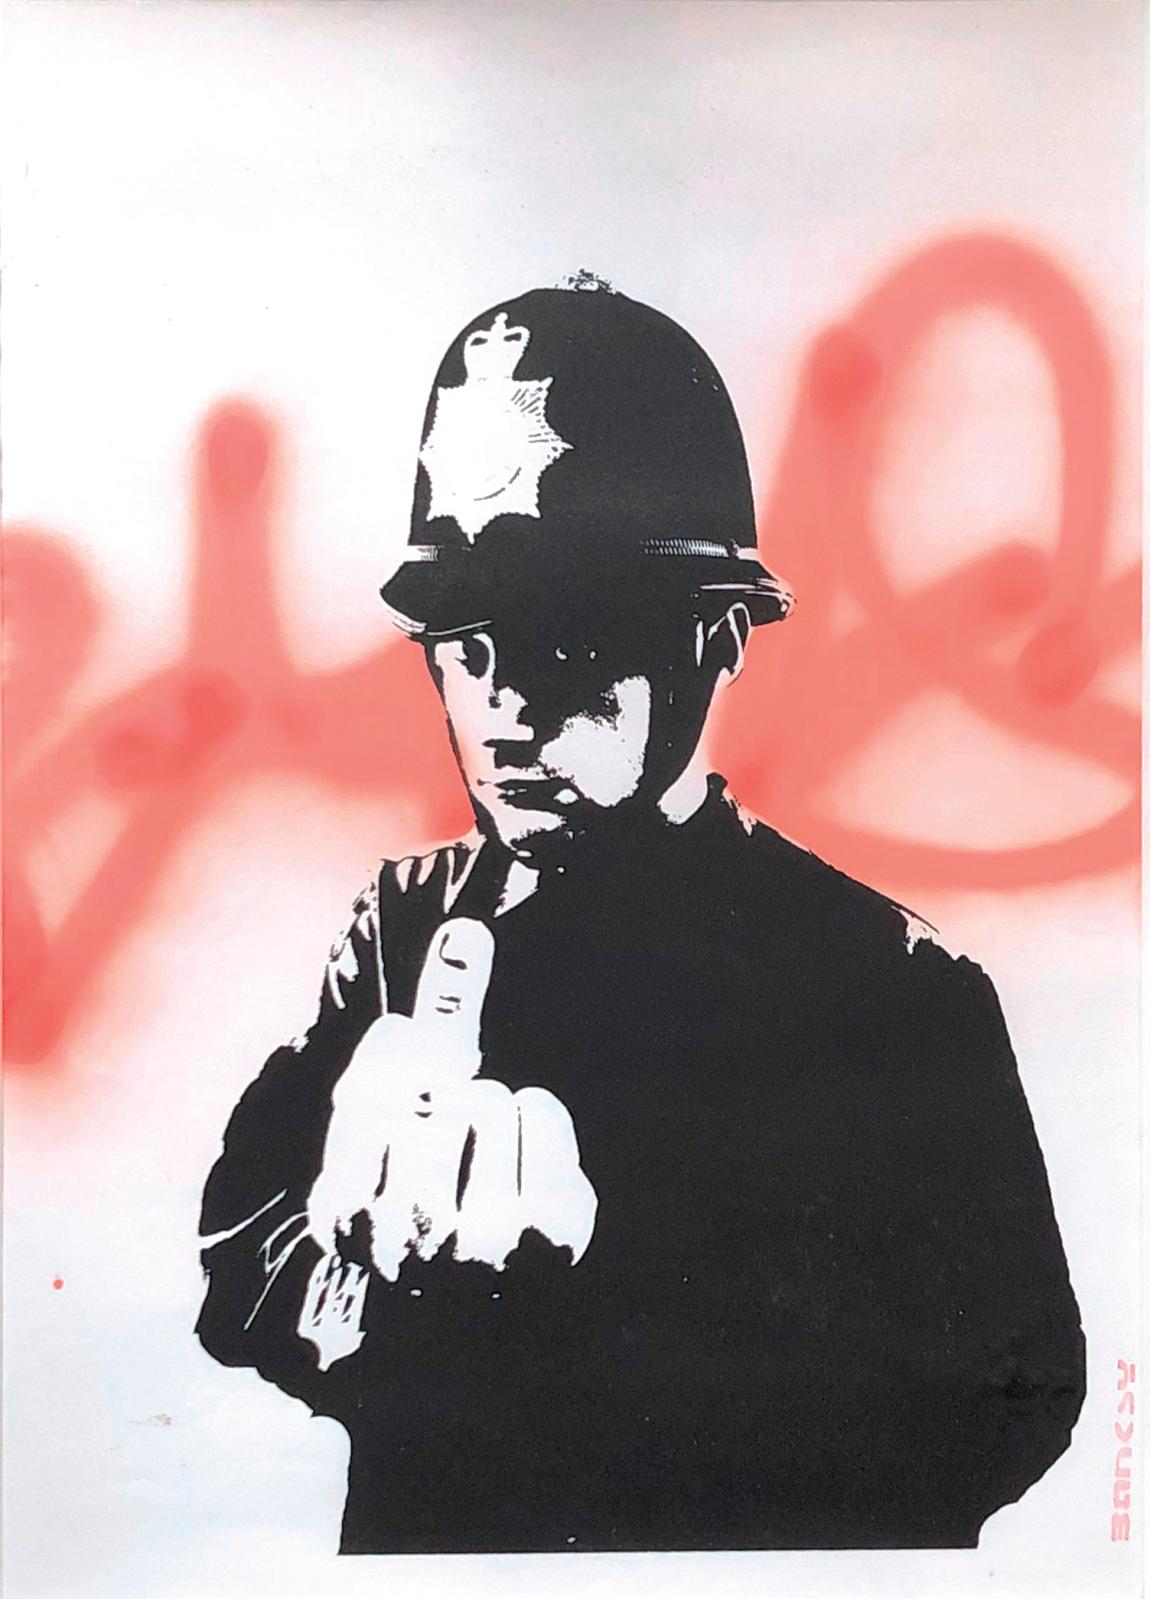 L’honneur de la police selon Banksy